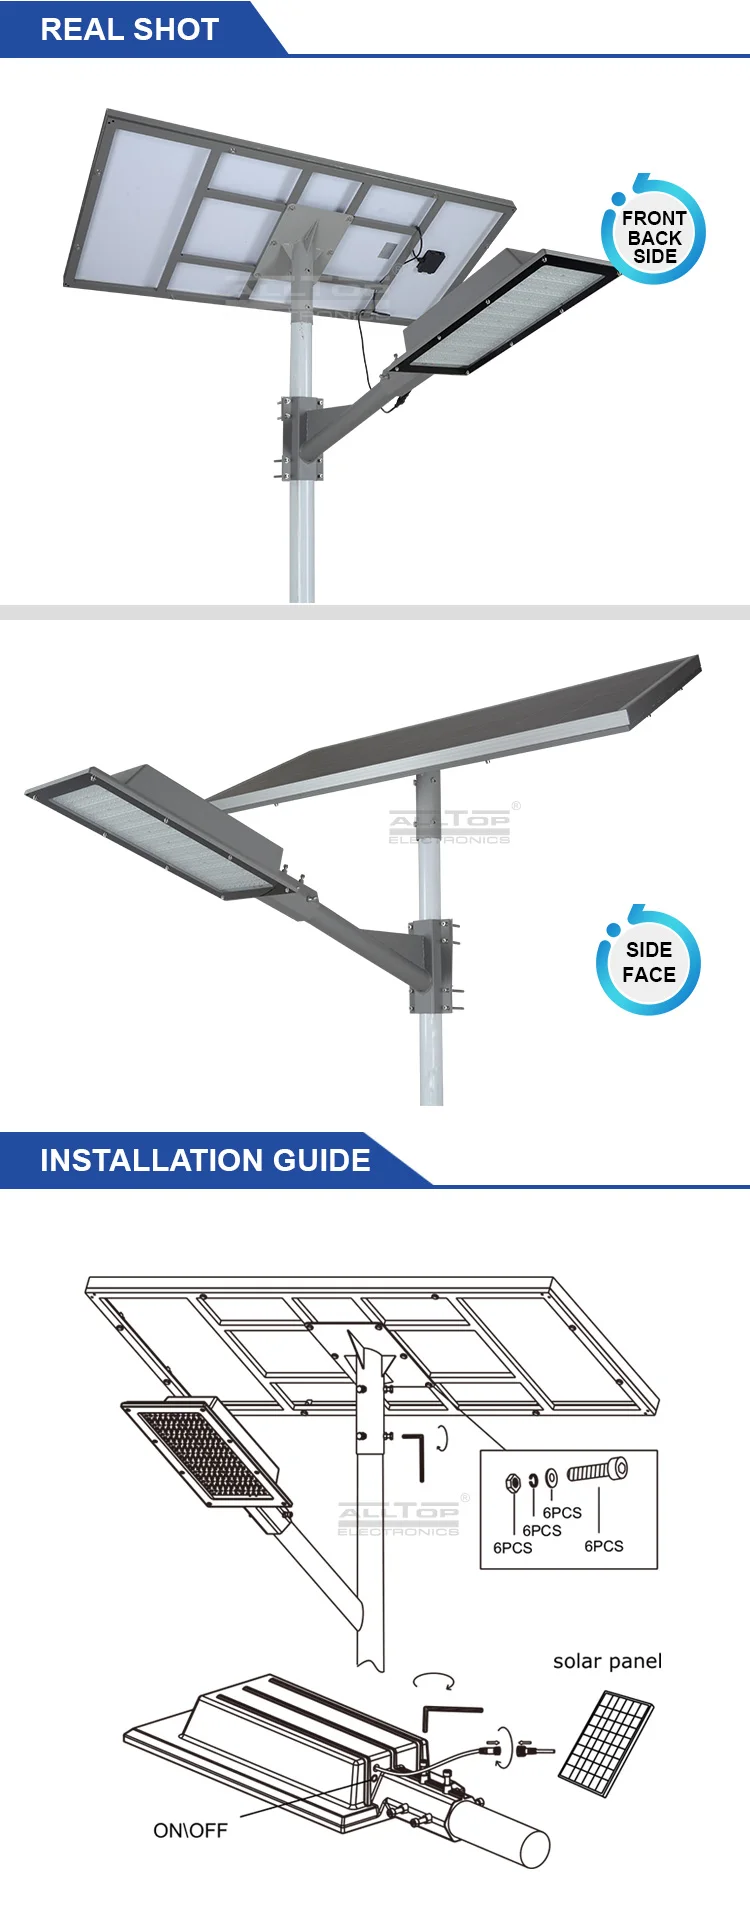 ALLTOP Tool free disassembly Aluminum housing outdoor lighting ip66 180w solar led streetlight price